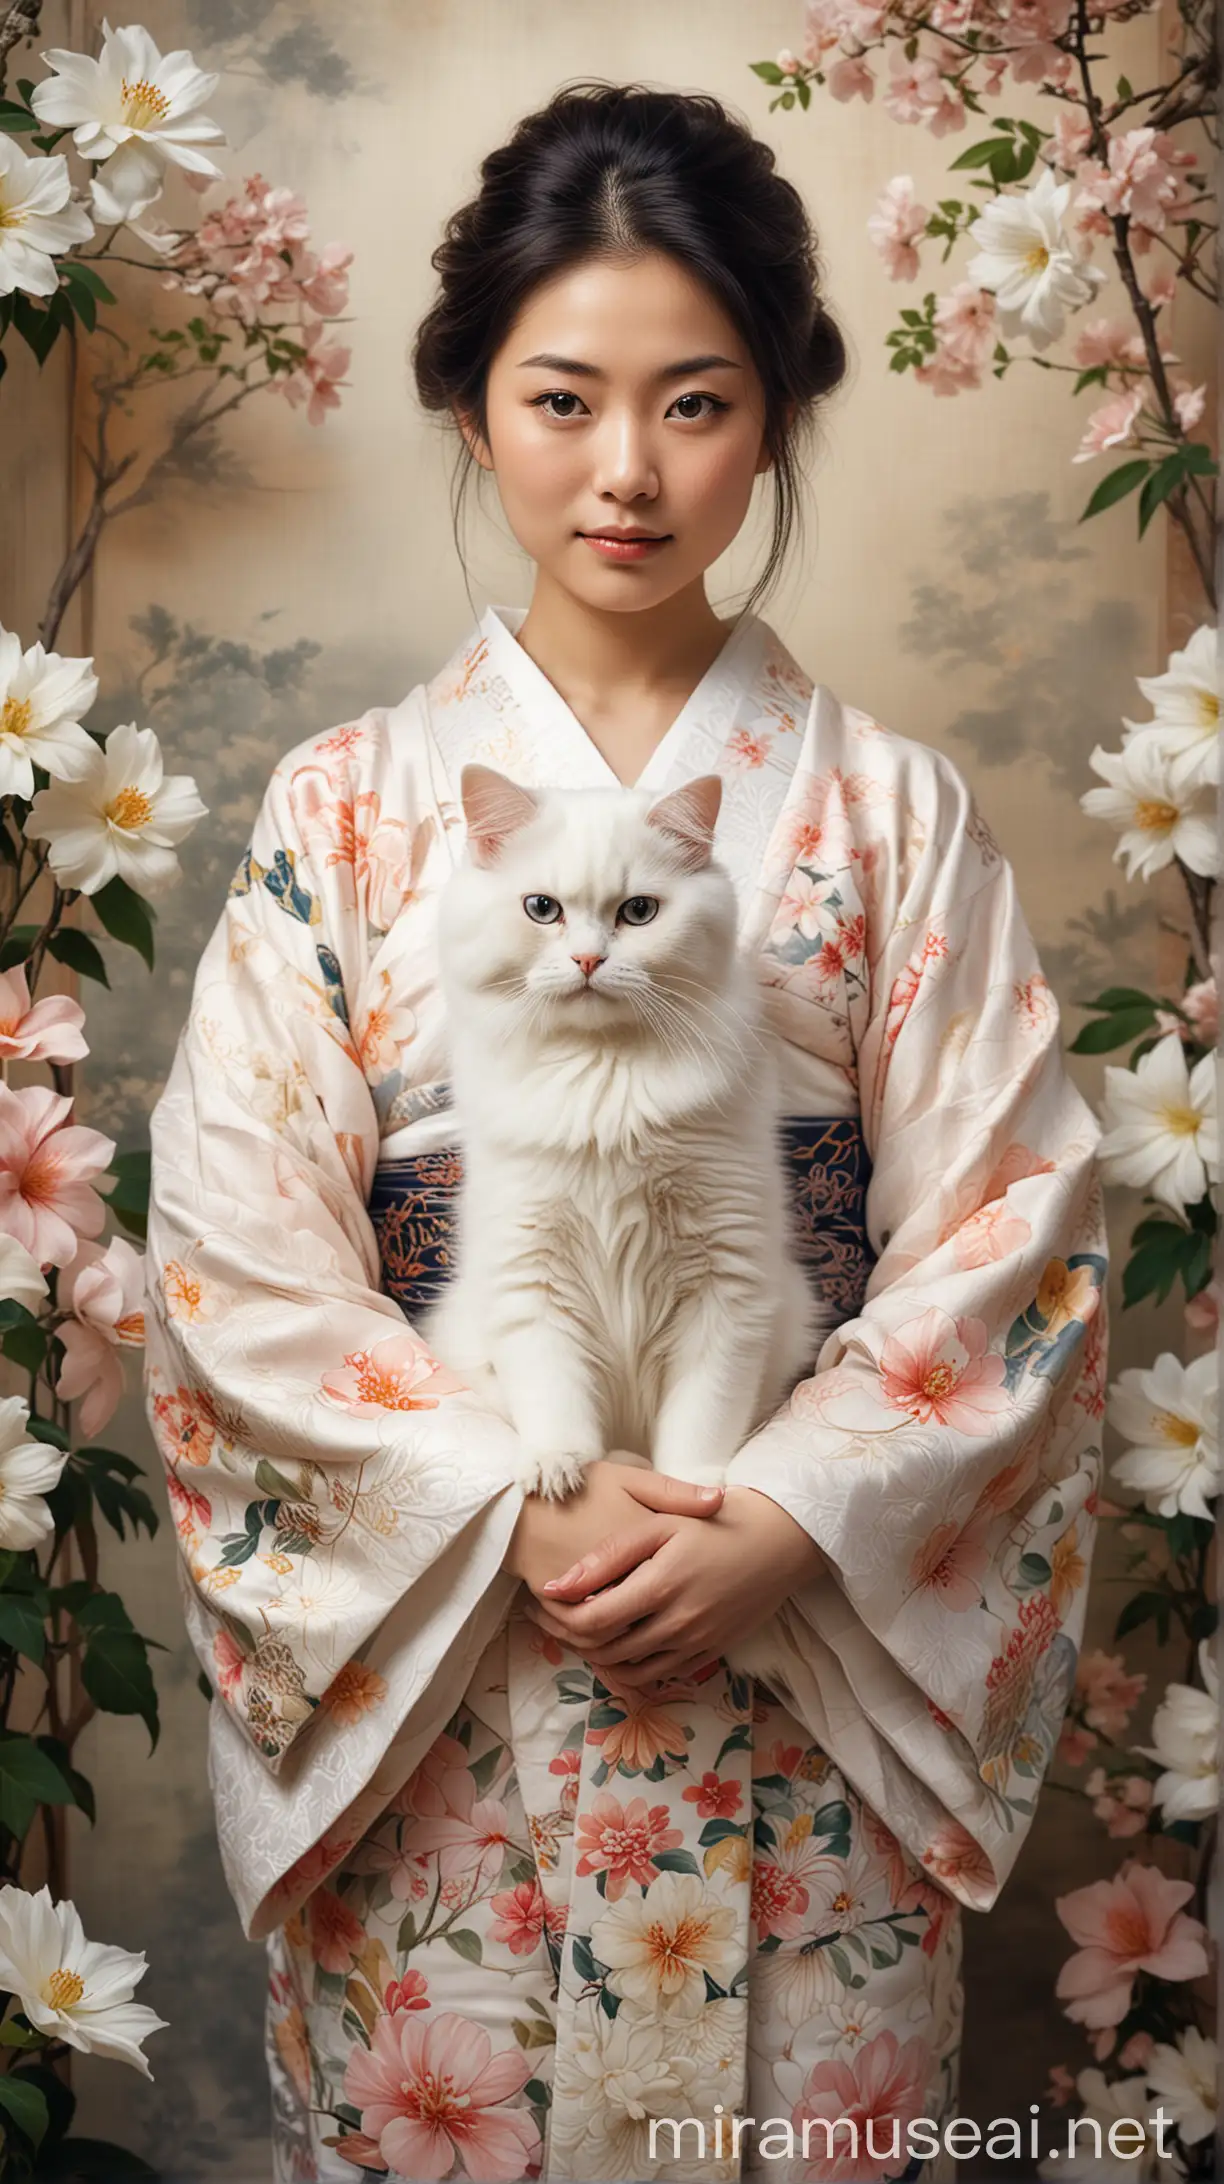 Potret seorang wanita muda Jepang cantik yang mengenakan kimono berornamen, menggendong seekor kucing
Persia putih. Pemandangan ini diatur dengan latar belakang pola bunga yang halus, dibuat menggunakan kombinasi fotografi dan teknik eksposur ganda. Ekspresi tenang wanita dan mata kucing yang tajam menciptakan rasa keindahan yang halus dan persahabatan yang tenang. Detail kimono yang rumit serta warna lembut dan hangat meningkatkan keanggunan gambar secara keseluruhan, realistis ultra HDR extreme